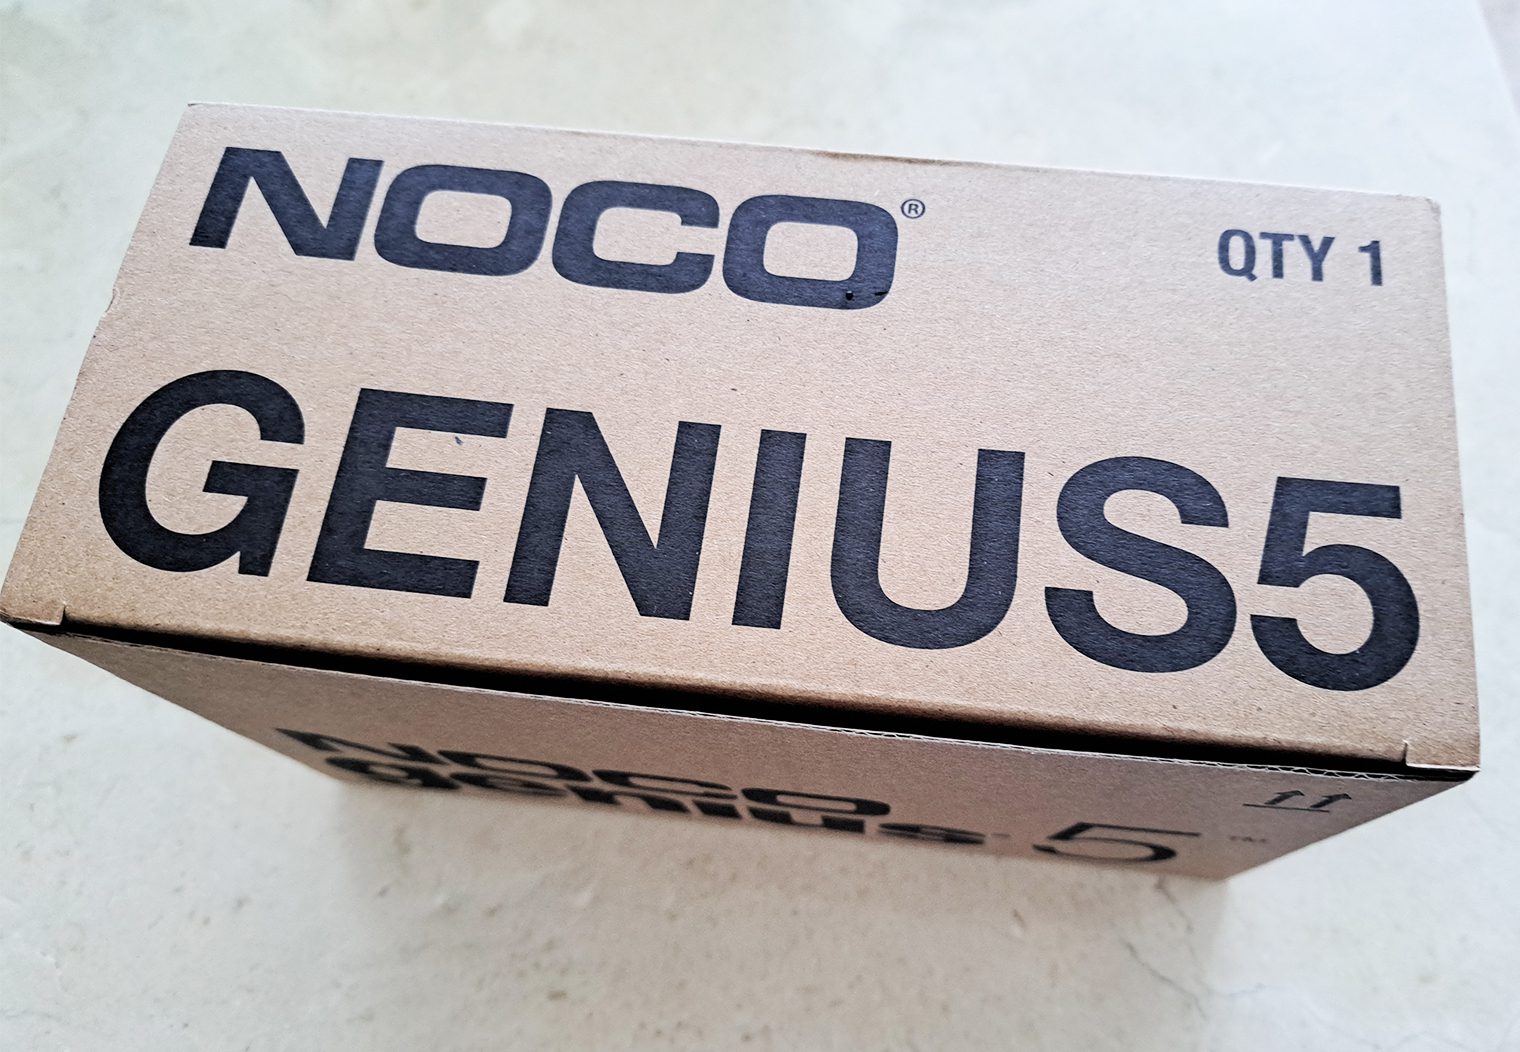 NOCO Genius5 in Shipping Box Angle